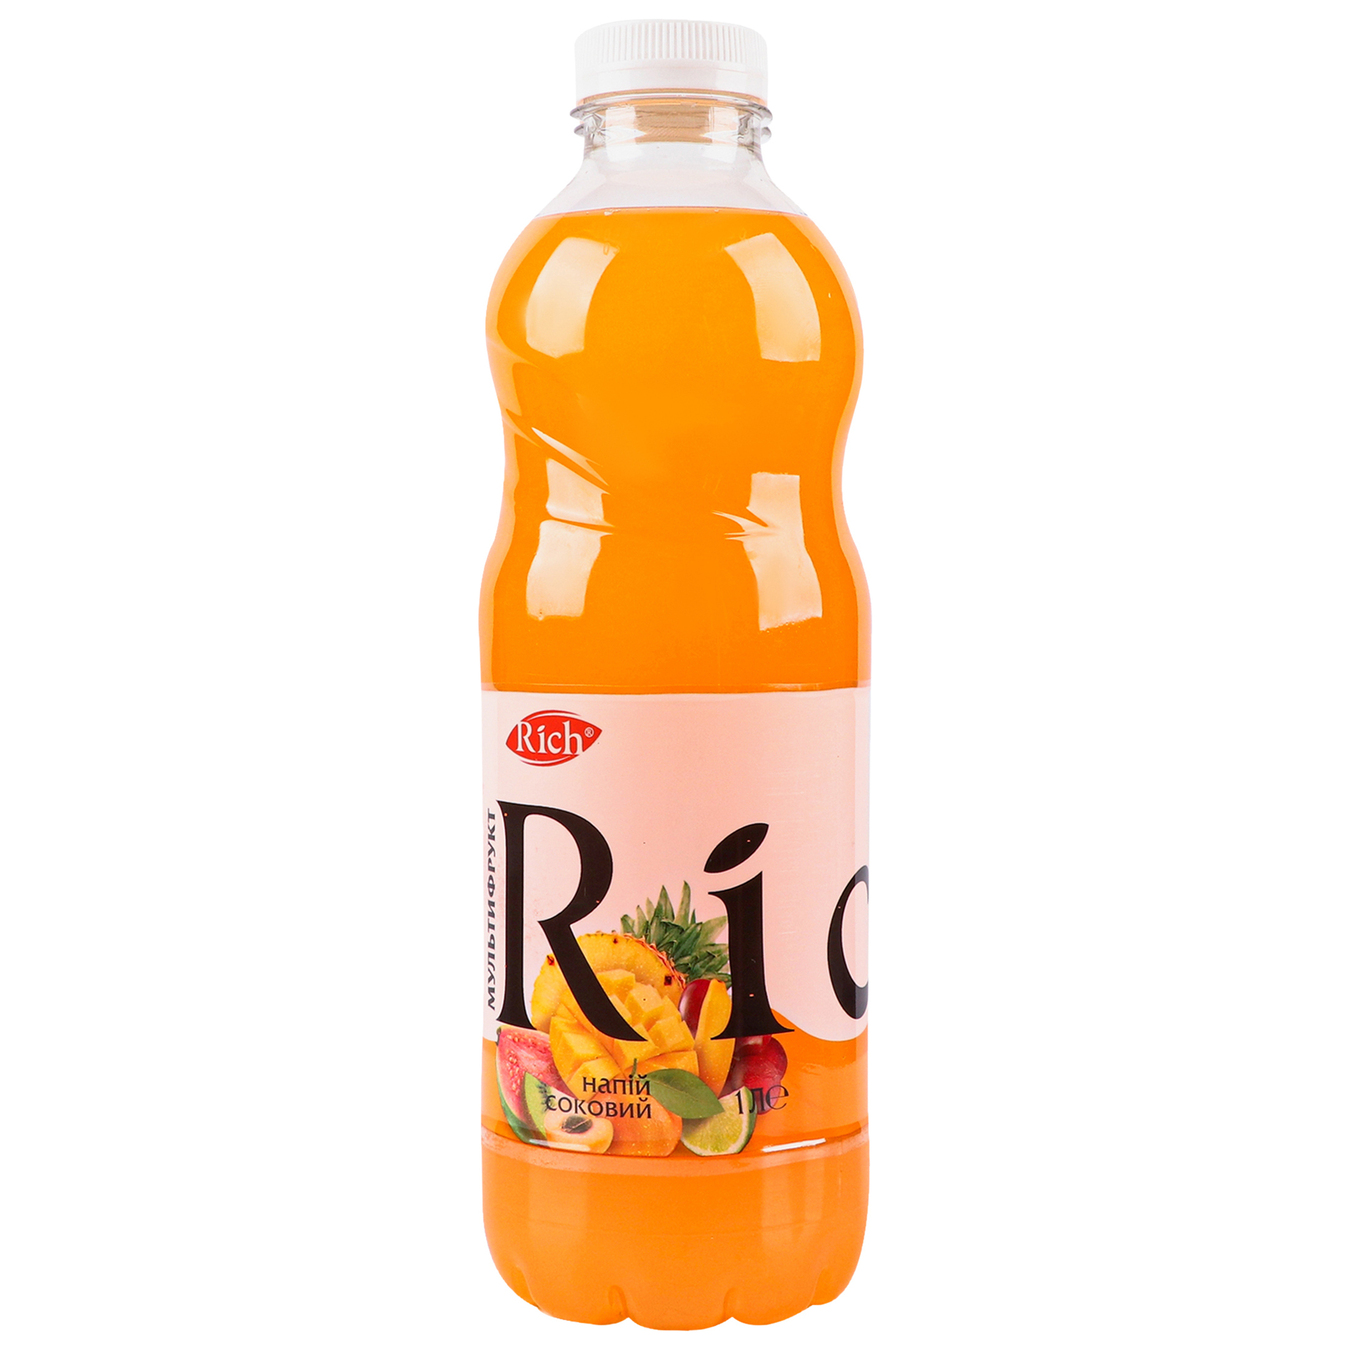 Juice drink Rich multifruit 1 liter